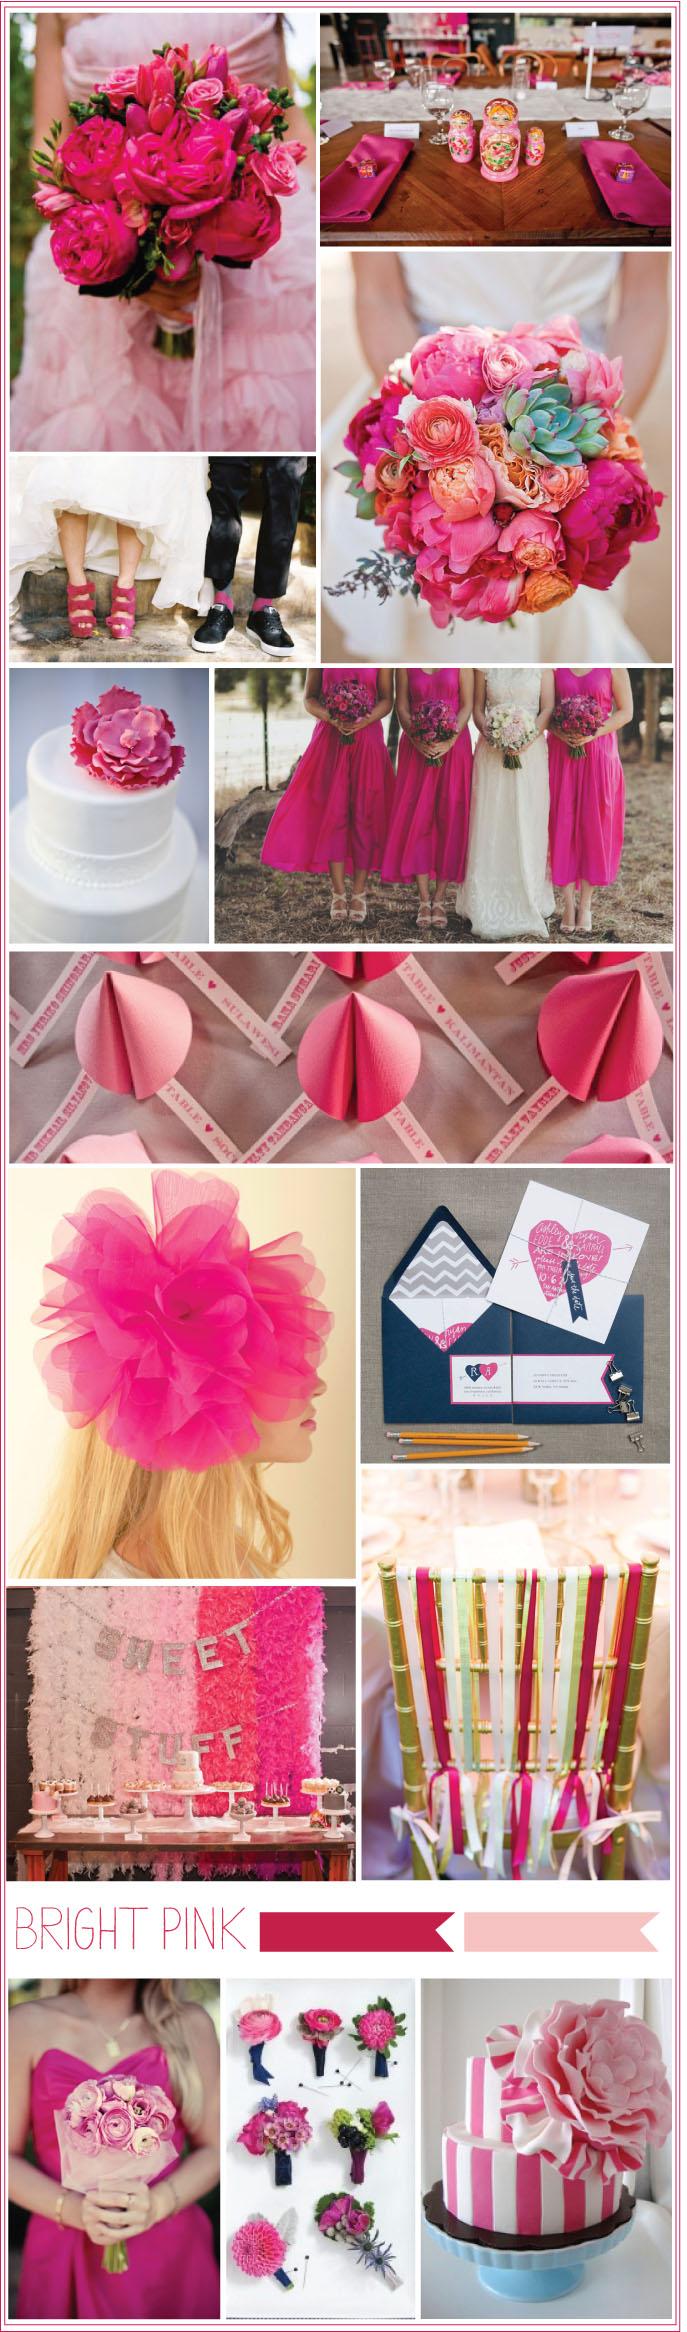 Wedding - Color Inspiration: Bright Pink